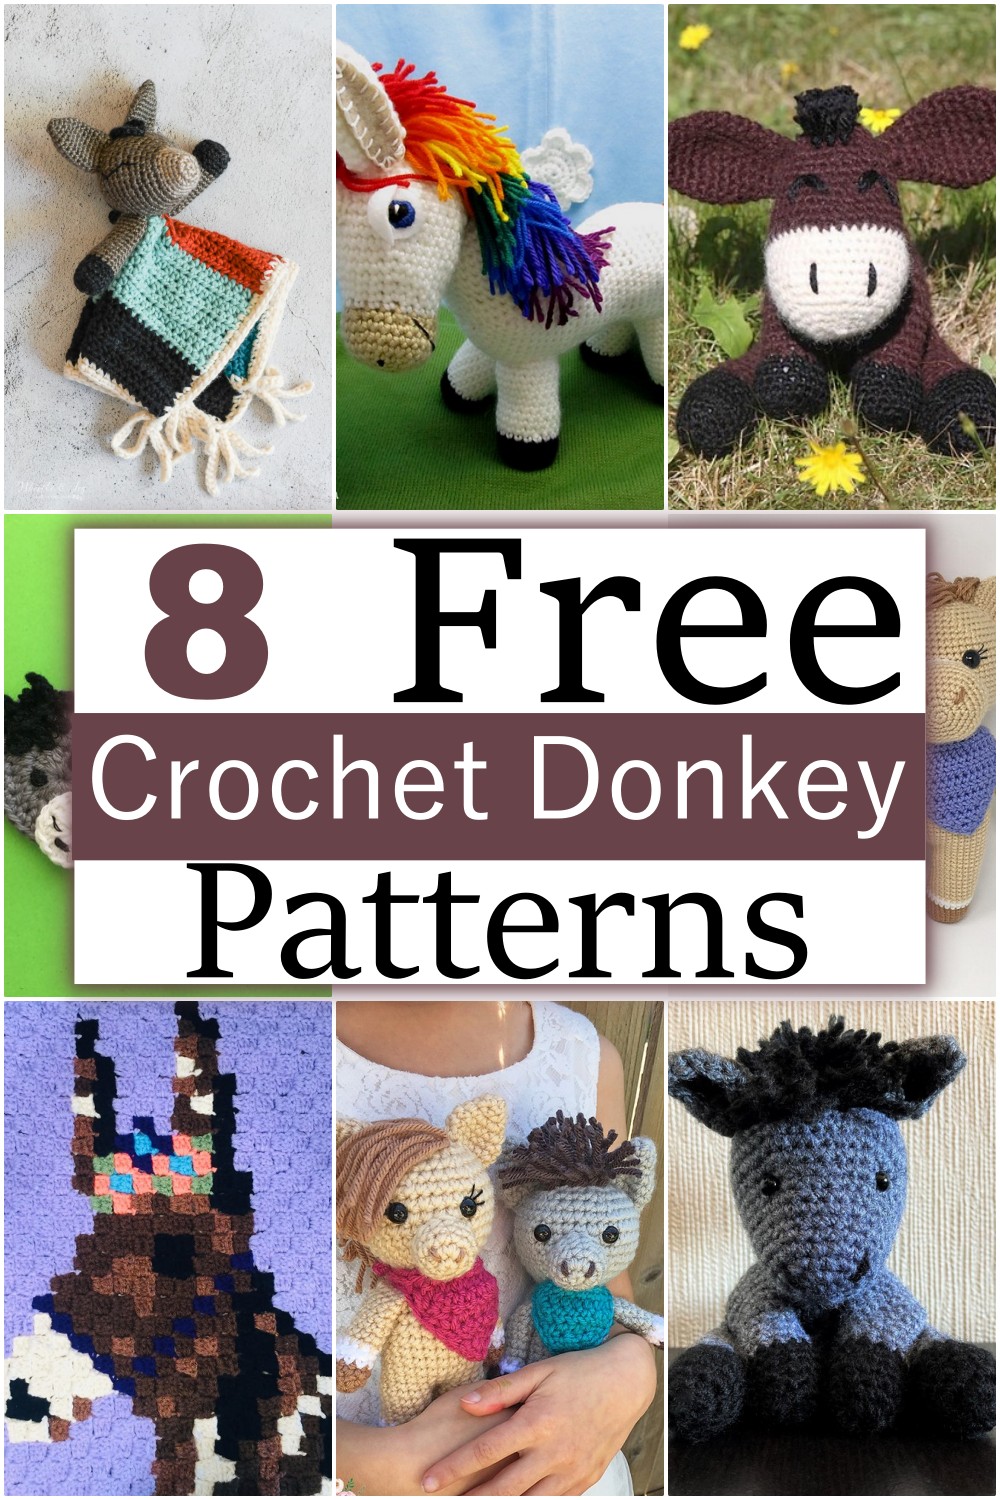  Free Crochet Donkey Patterns